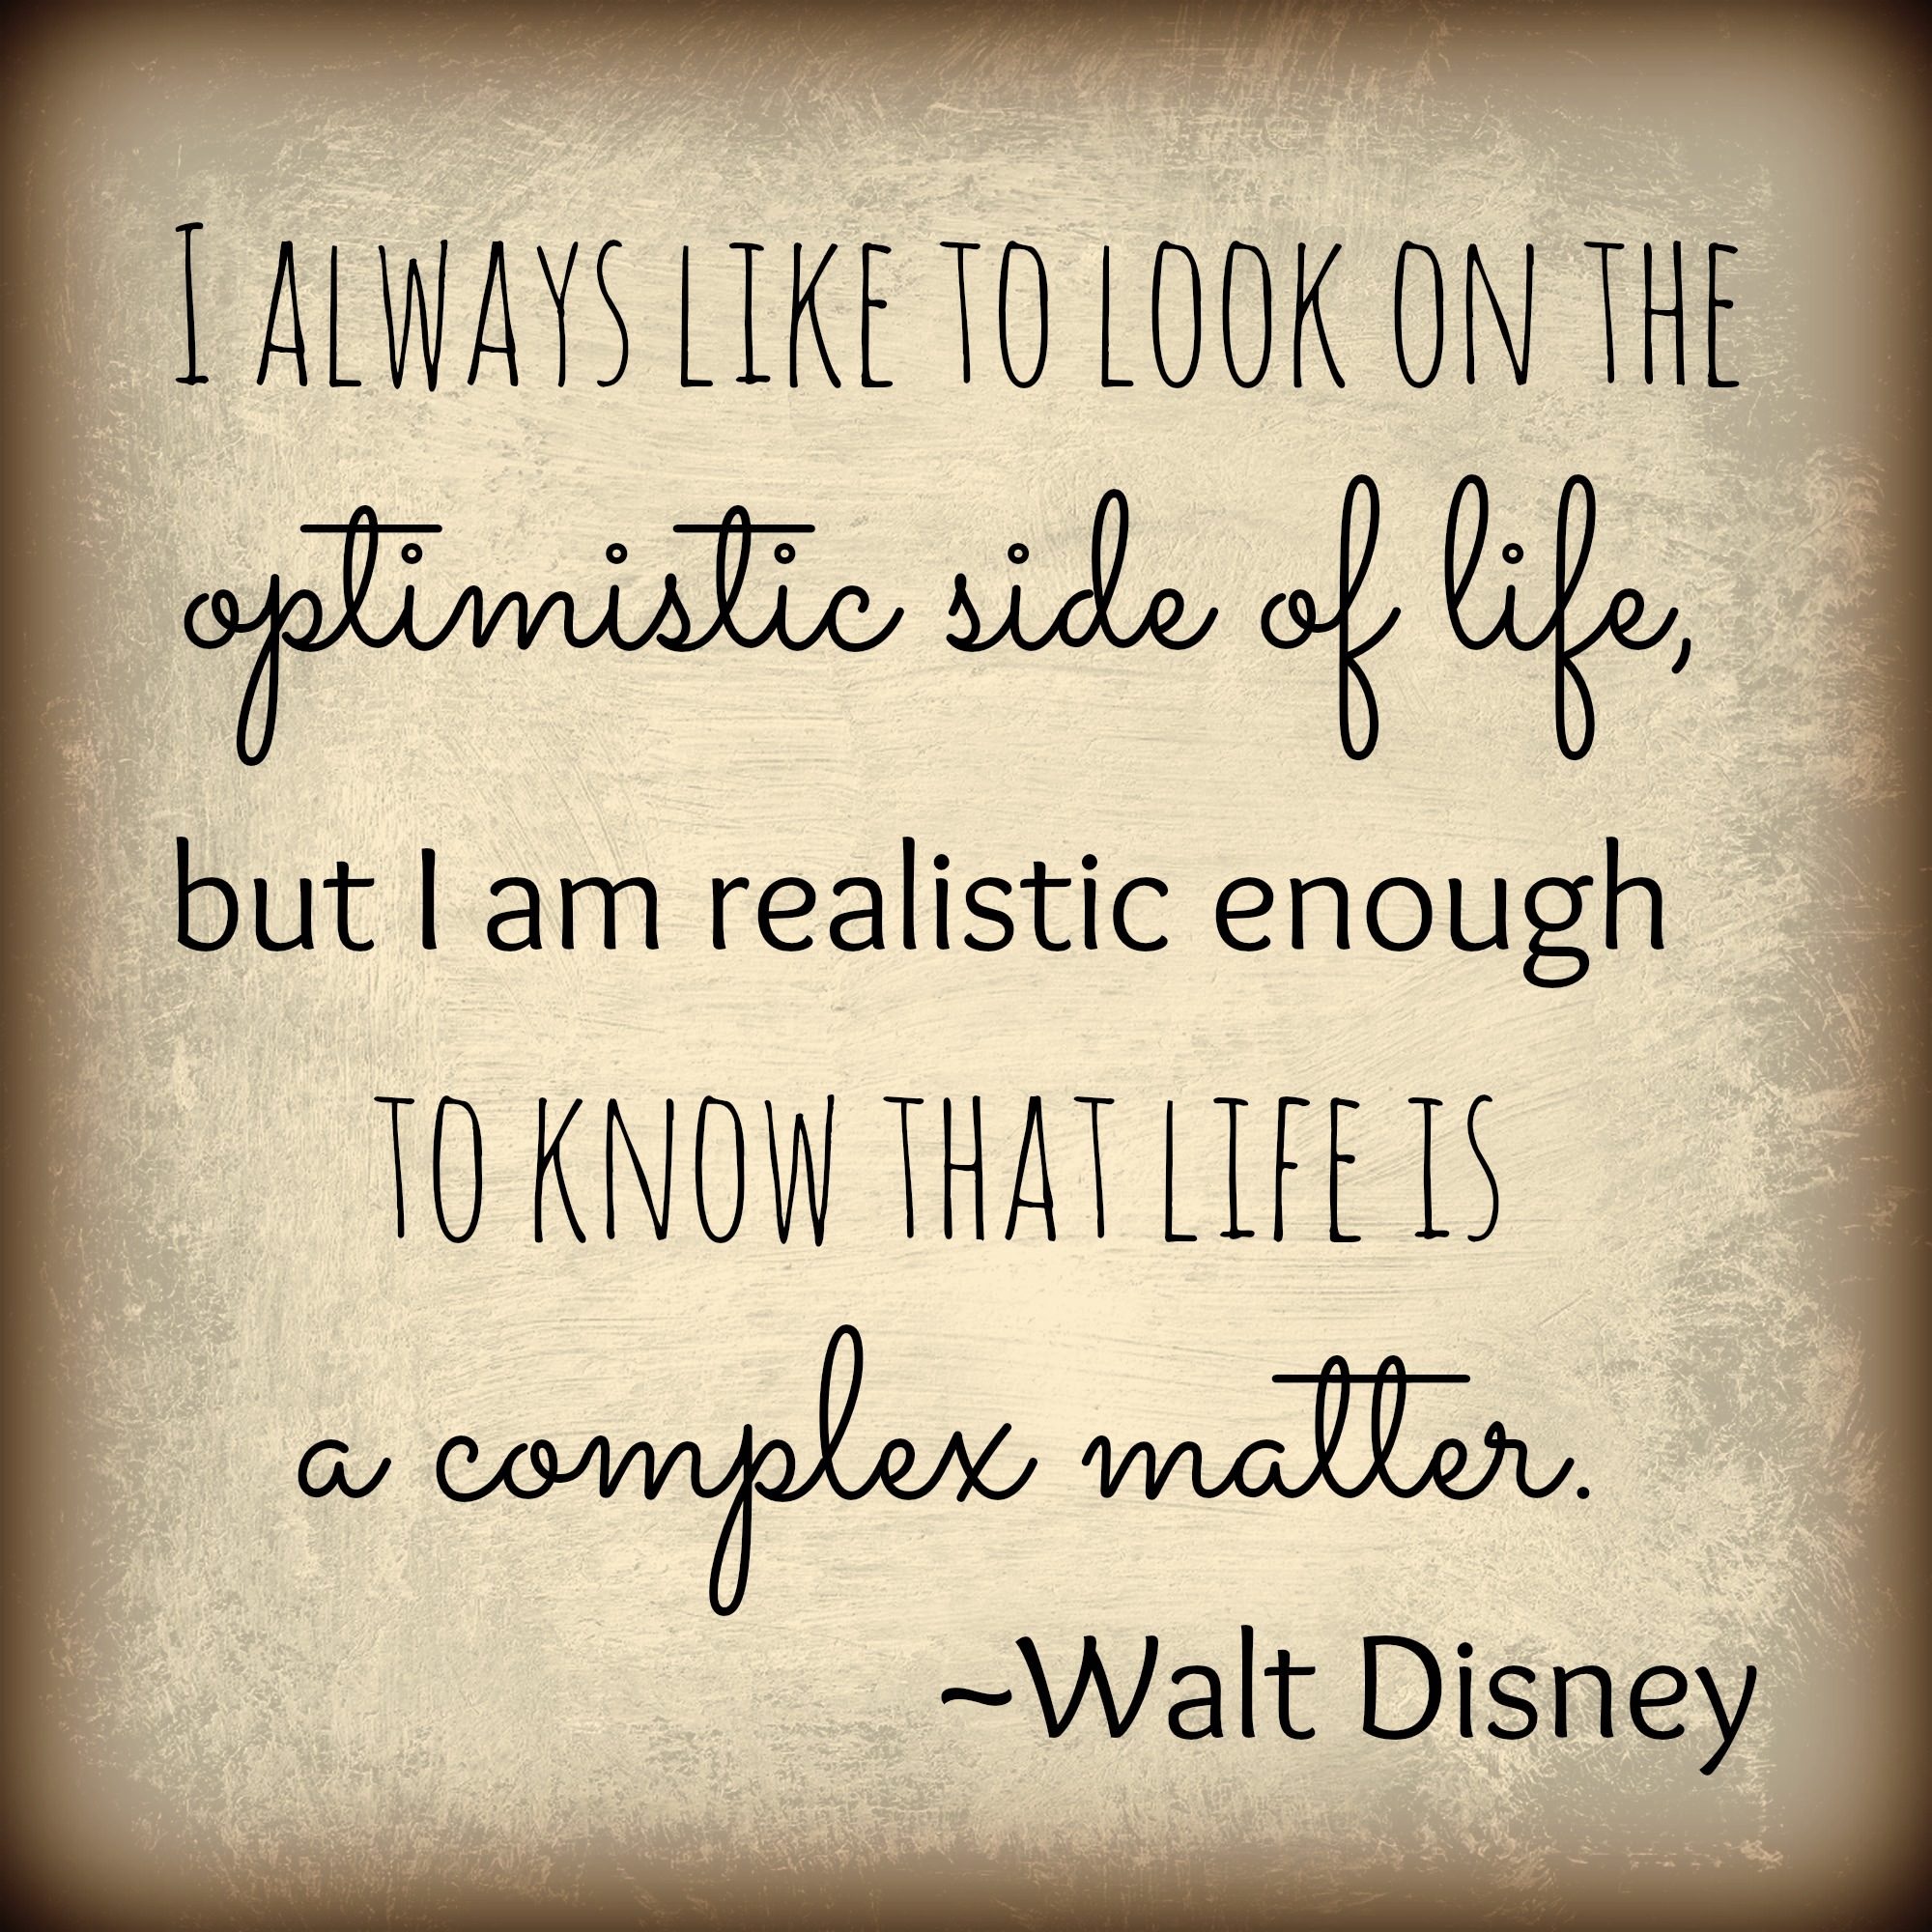 Walt Disney Inspirational Quotes Image Crazy Gallery